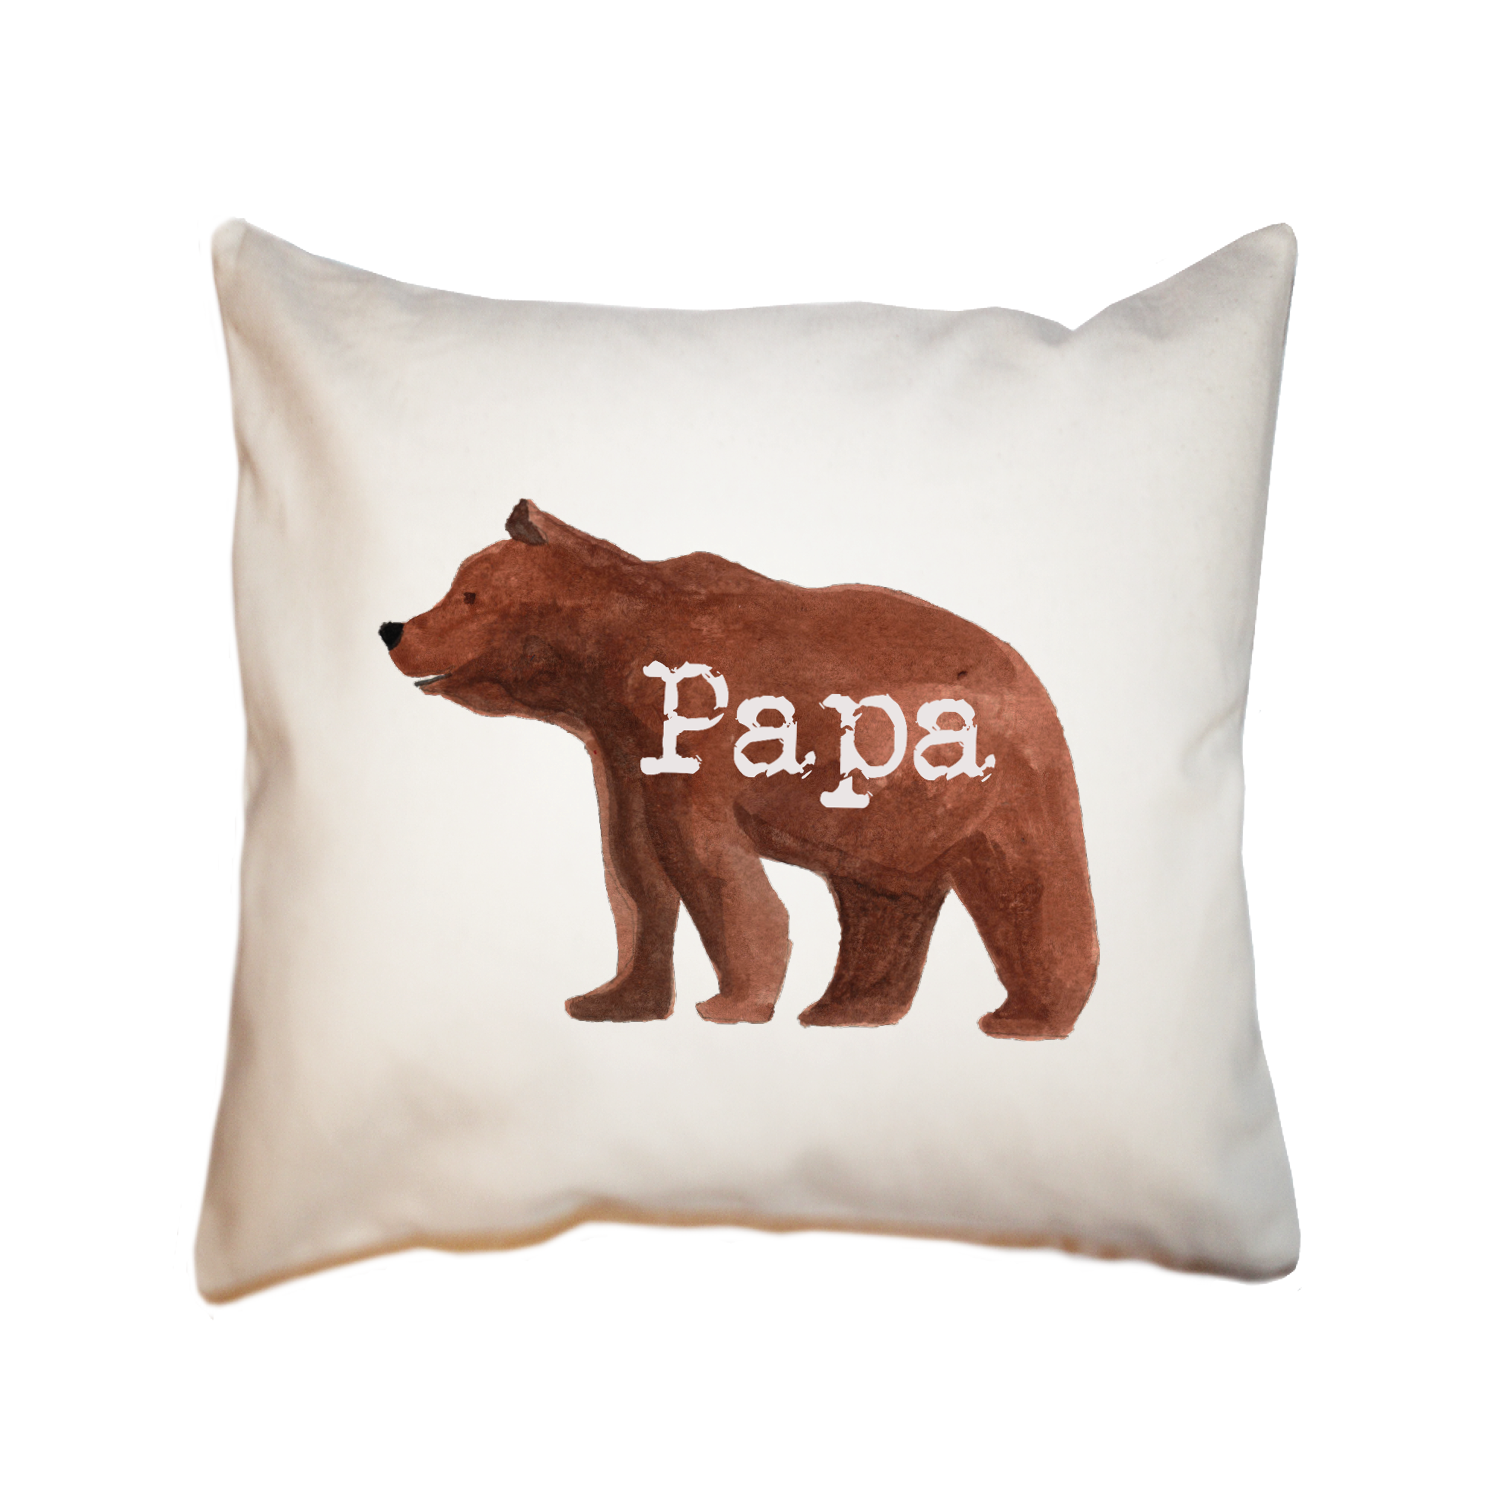 papa bear square pillow